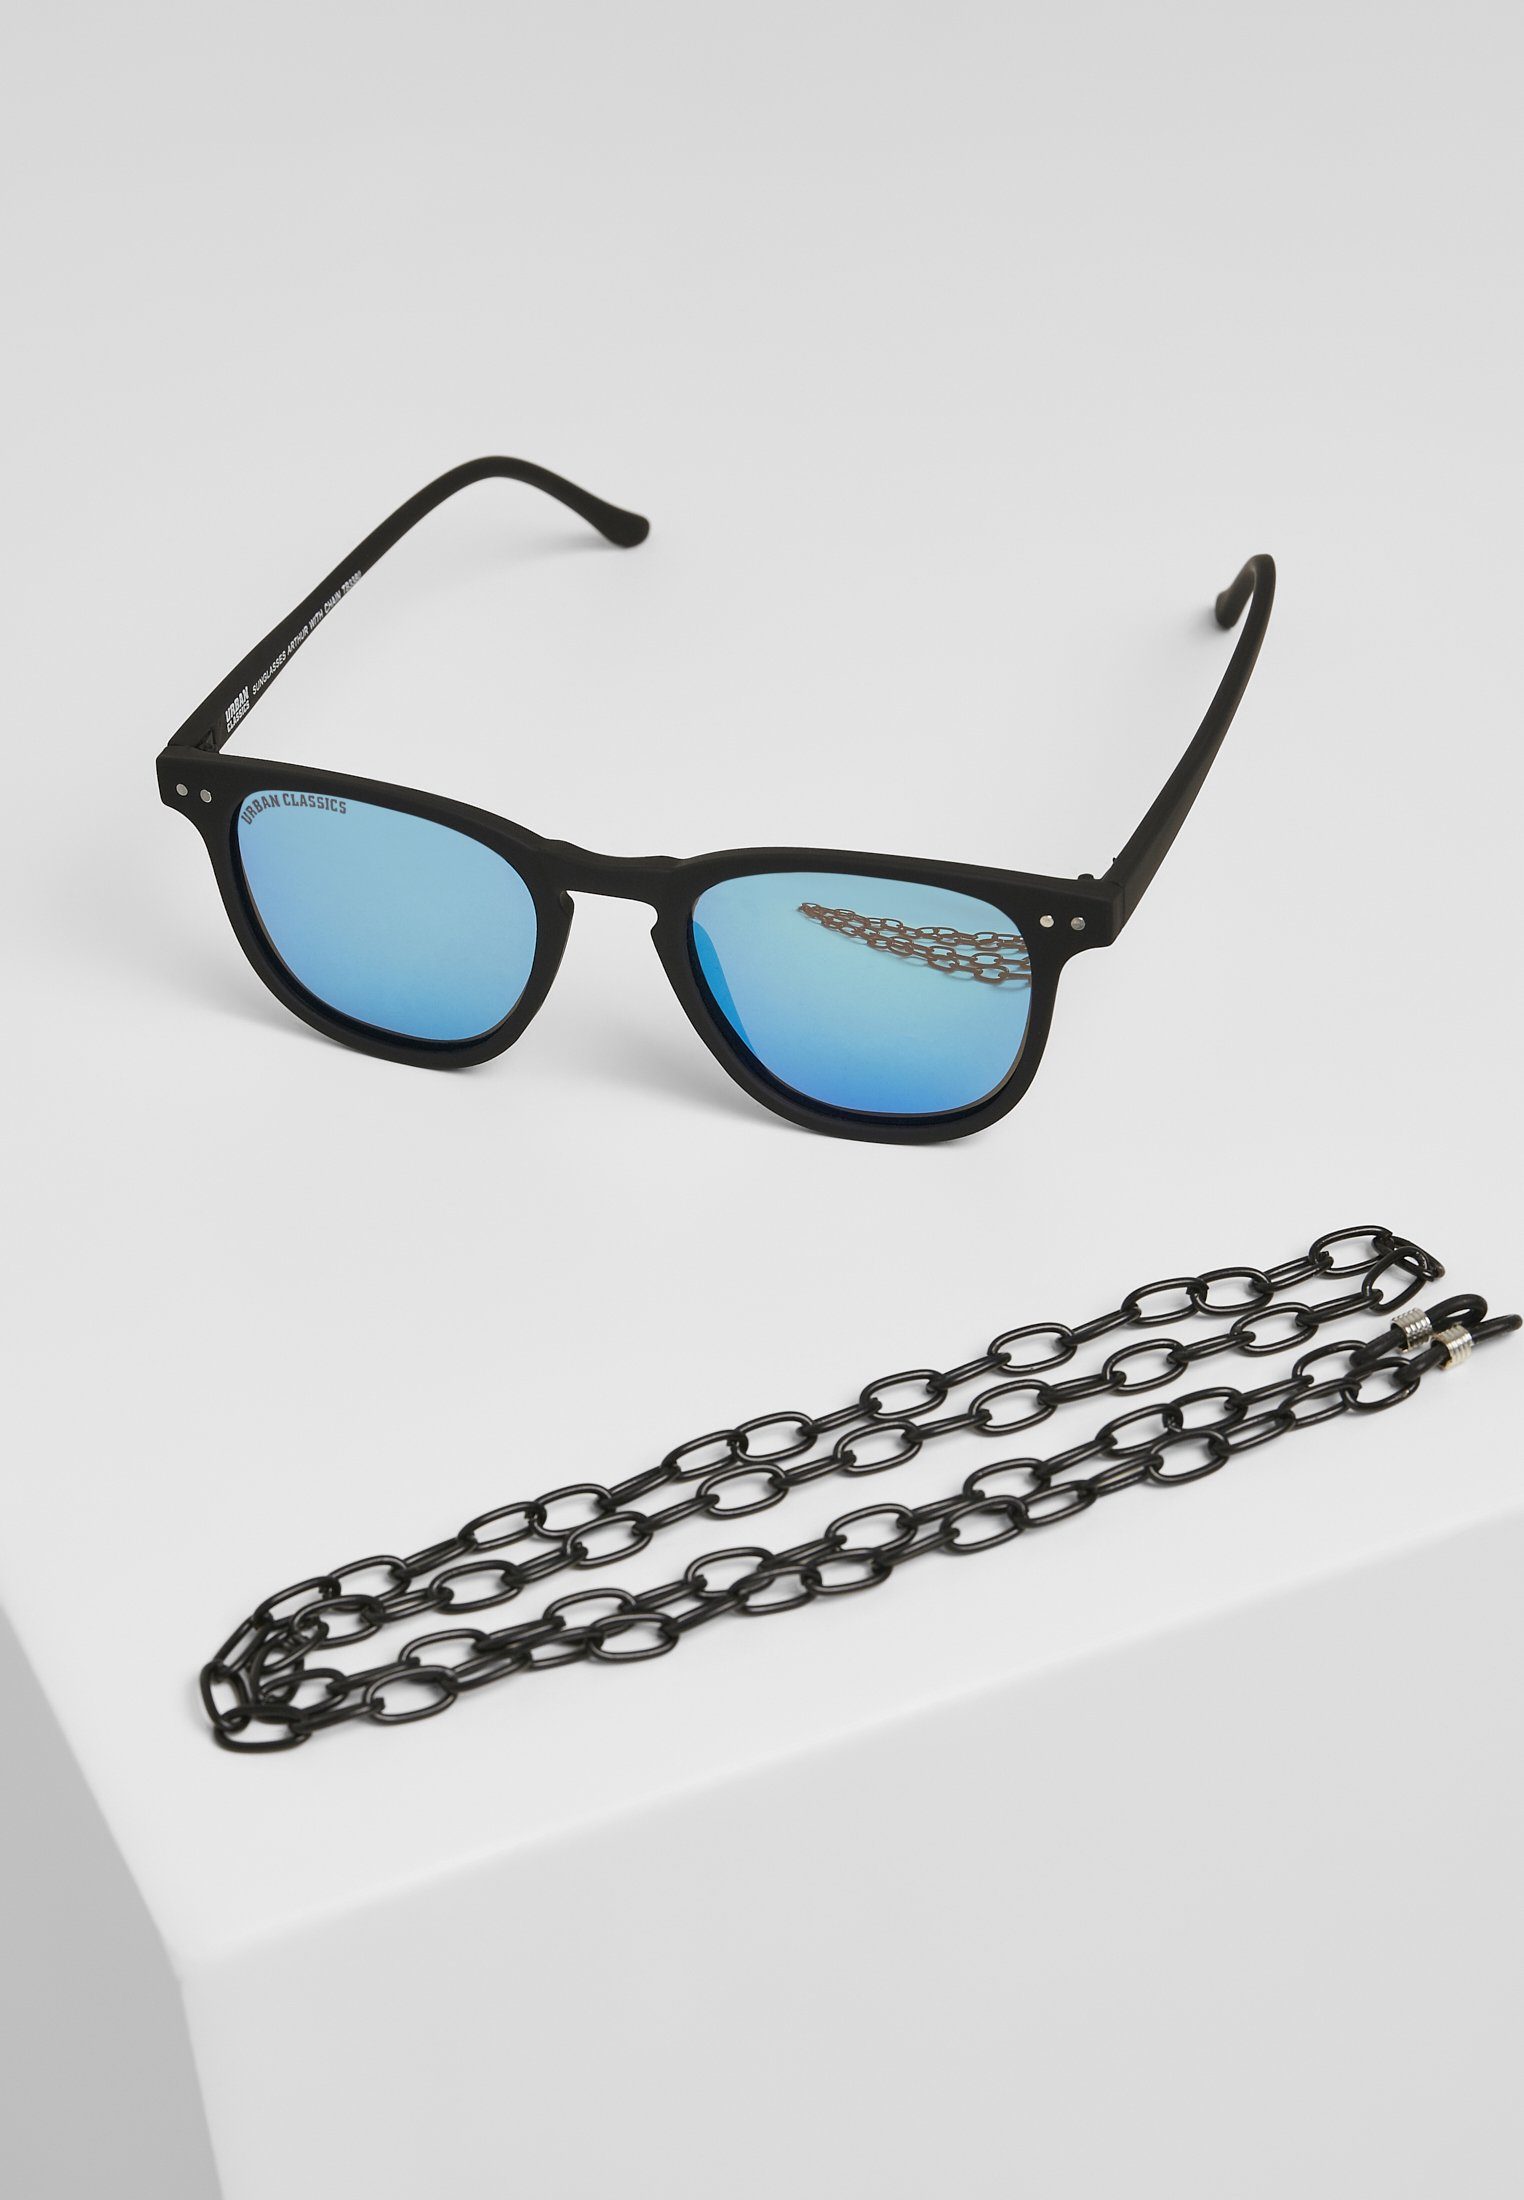 Sunglasses Arthur URBAN Sonnenbrille CLASSICS black/blue Unisex Chain with